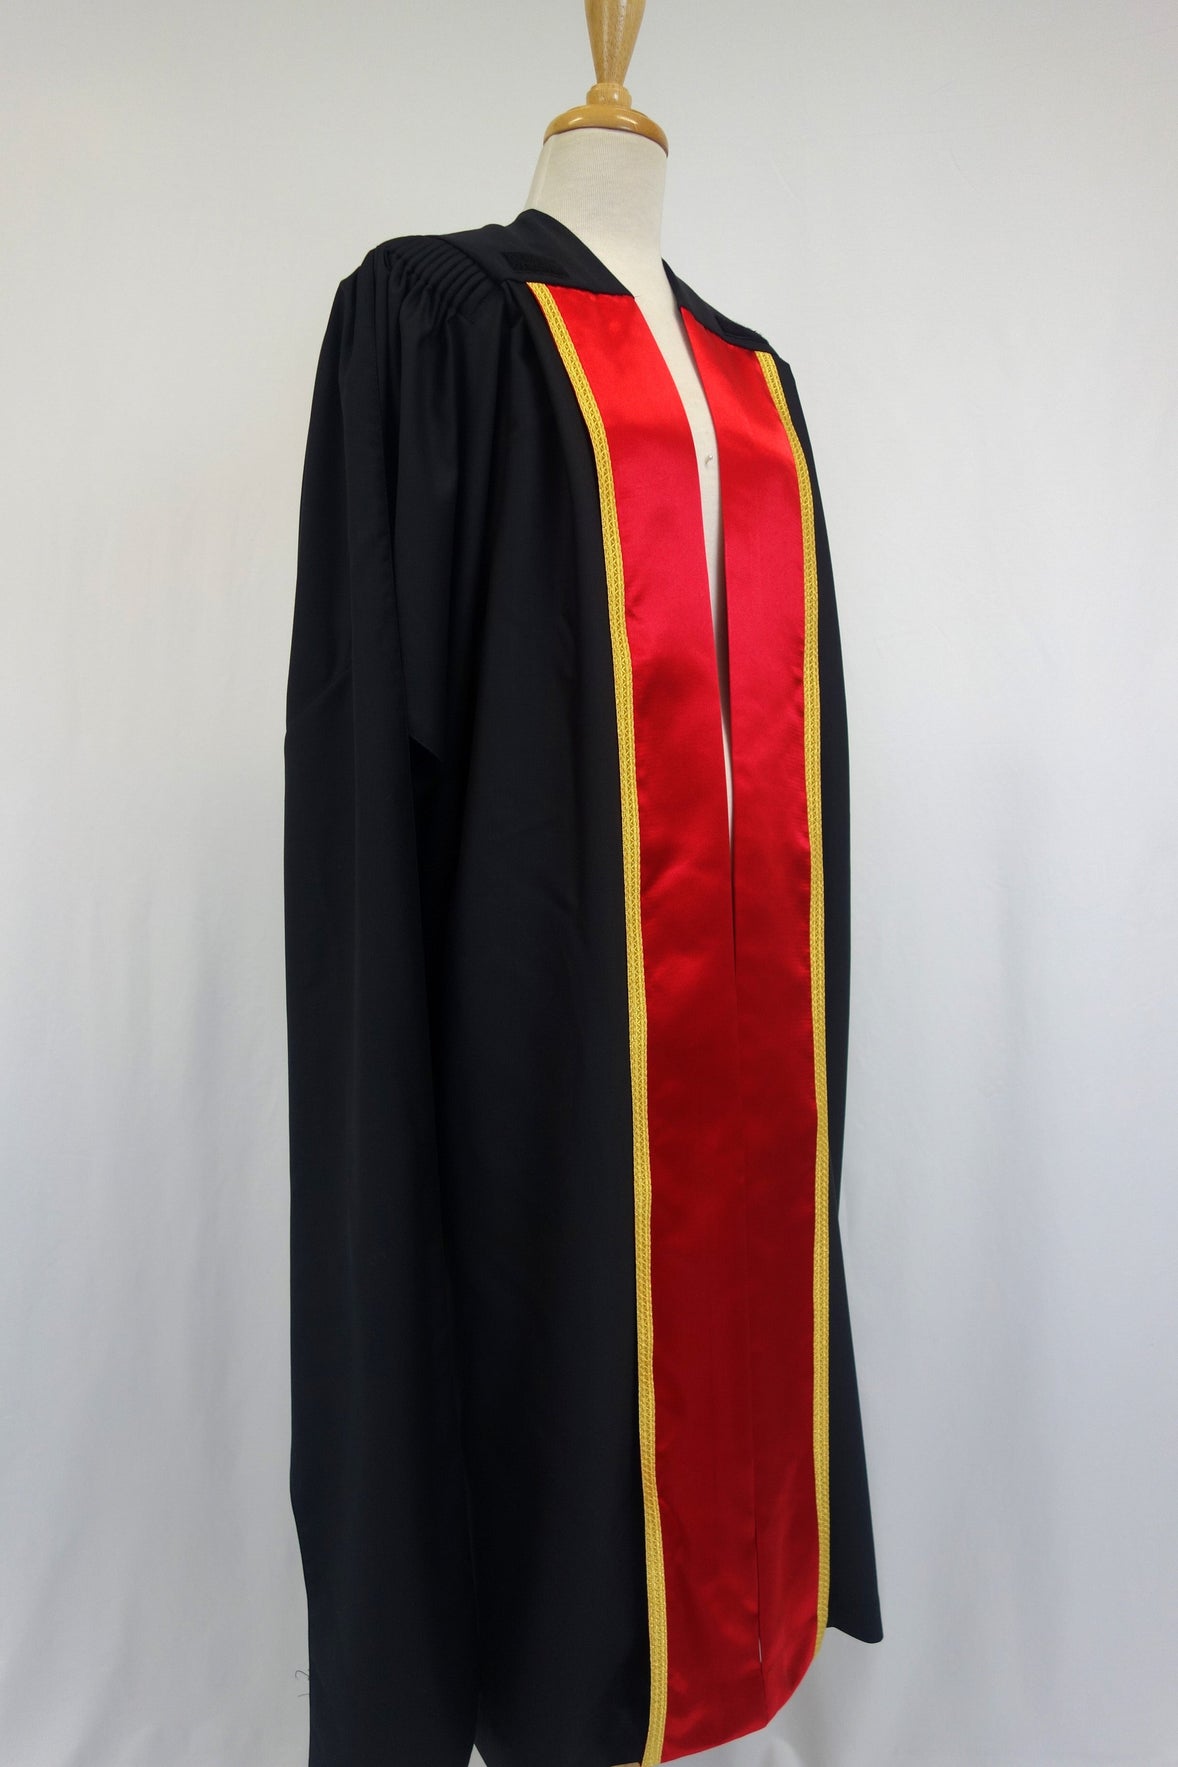 UWA PhD Graduation Gown